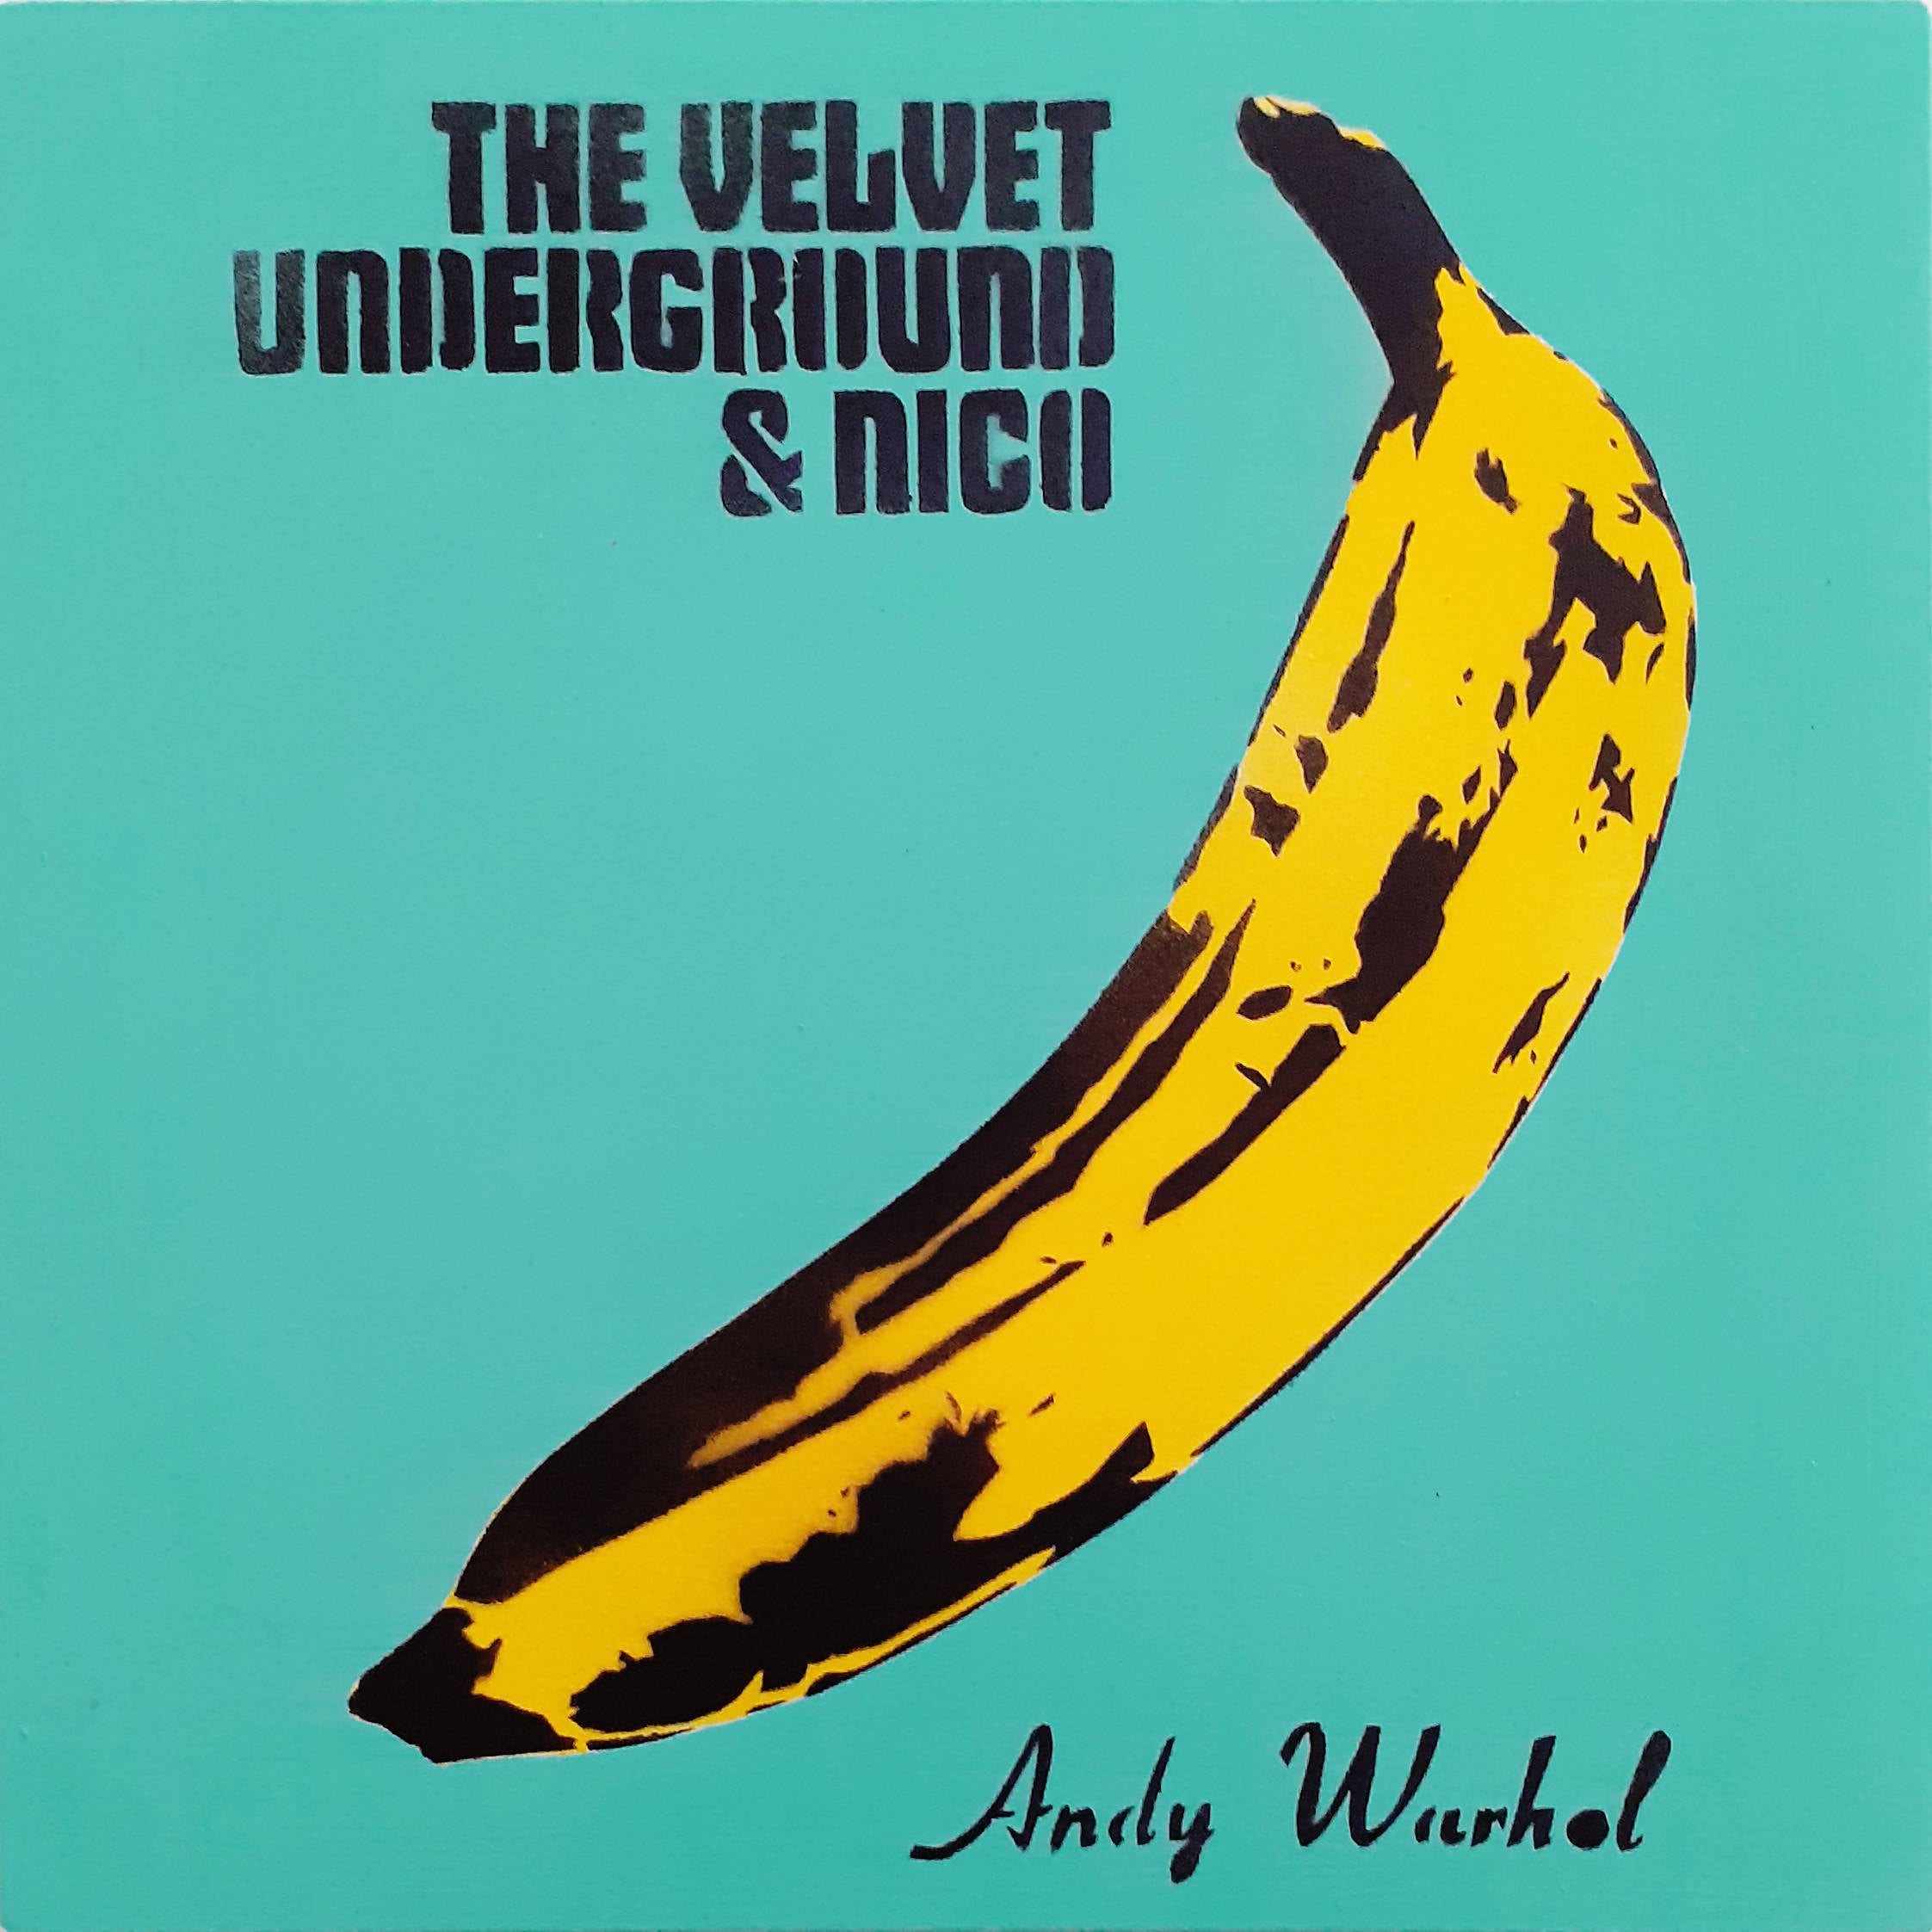 "Andy Warhol - The Velvet Underground"